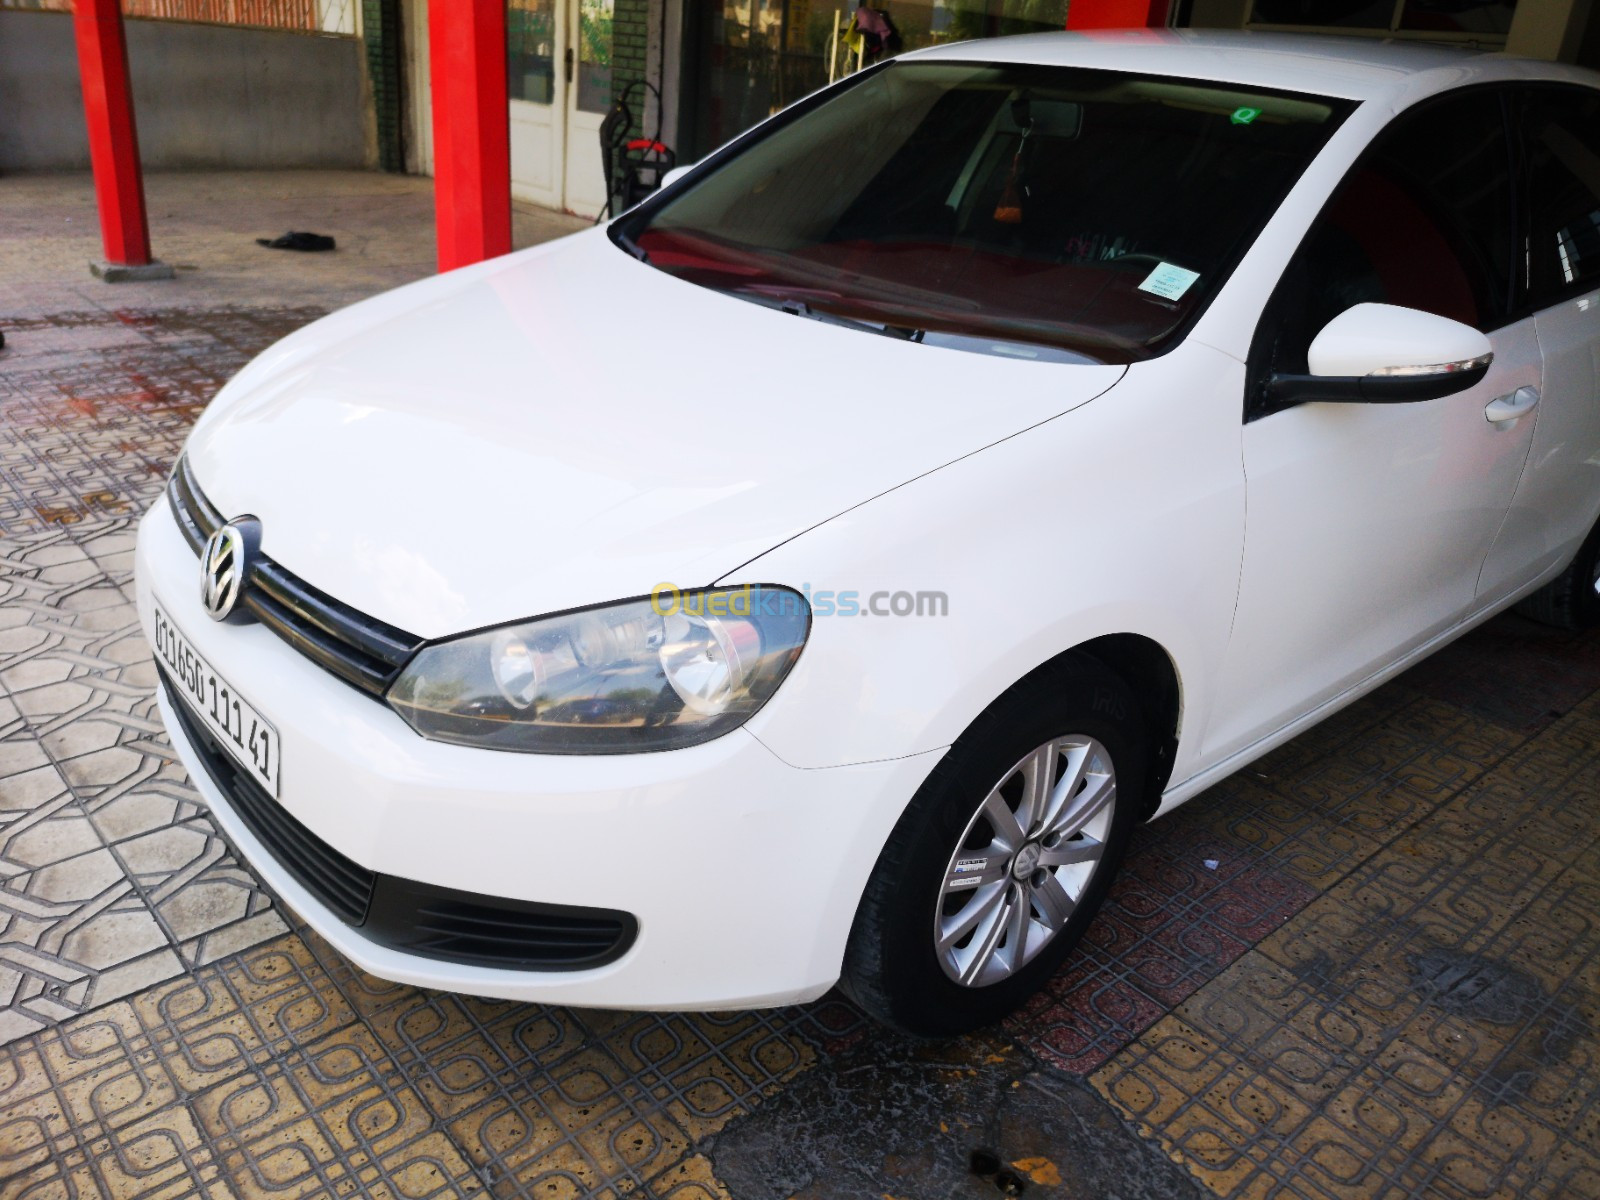 Økonomisk zoom Utroskab Volkswagen Golf 6 2011 Trendline - Souk ahras Algeria